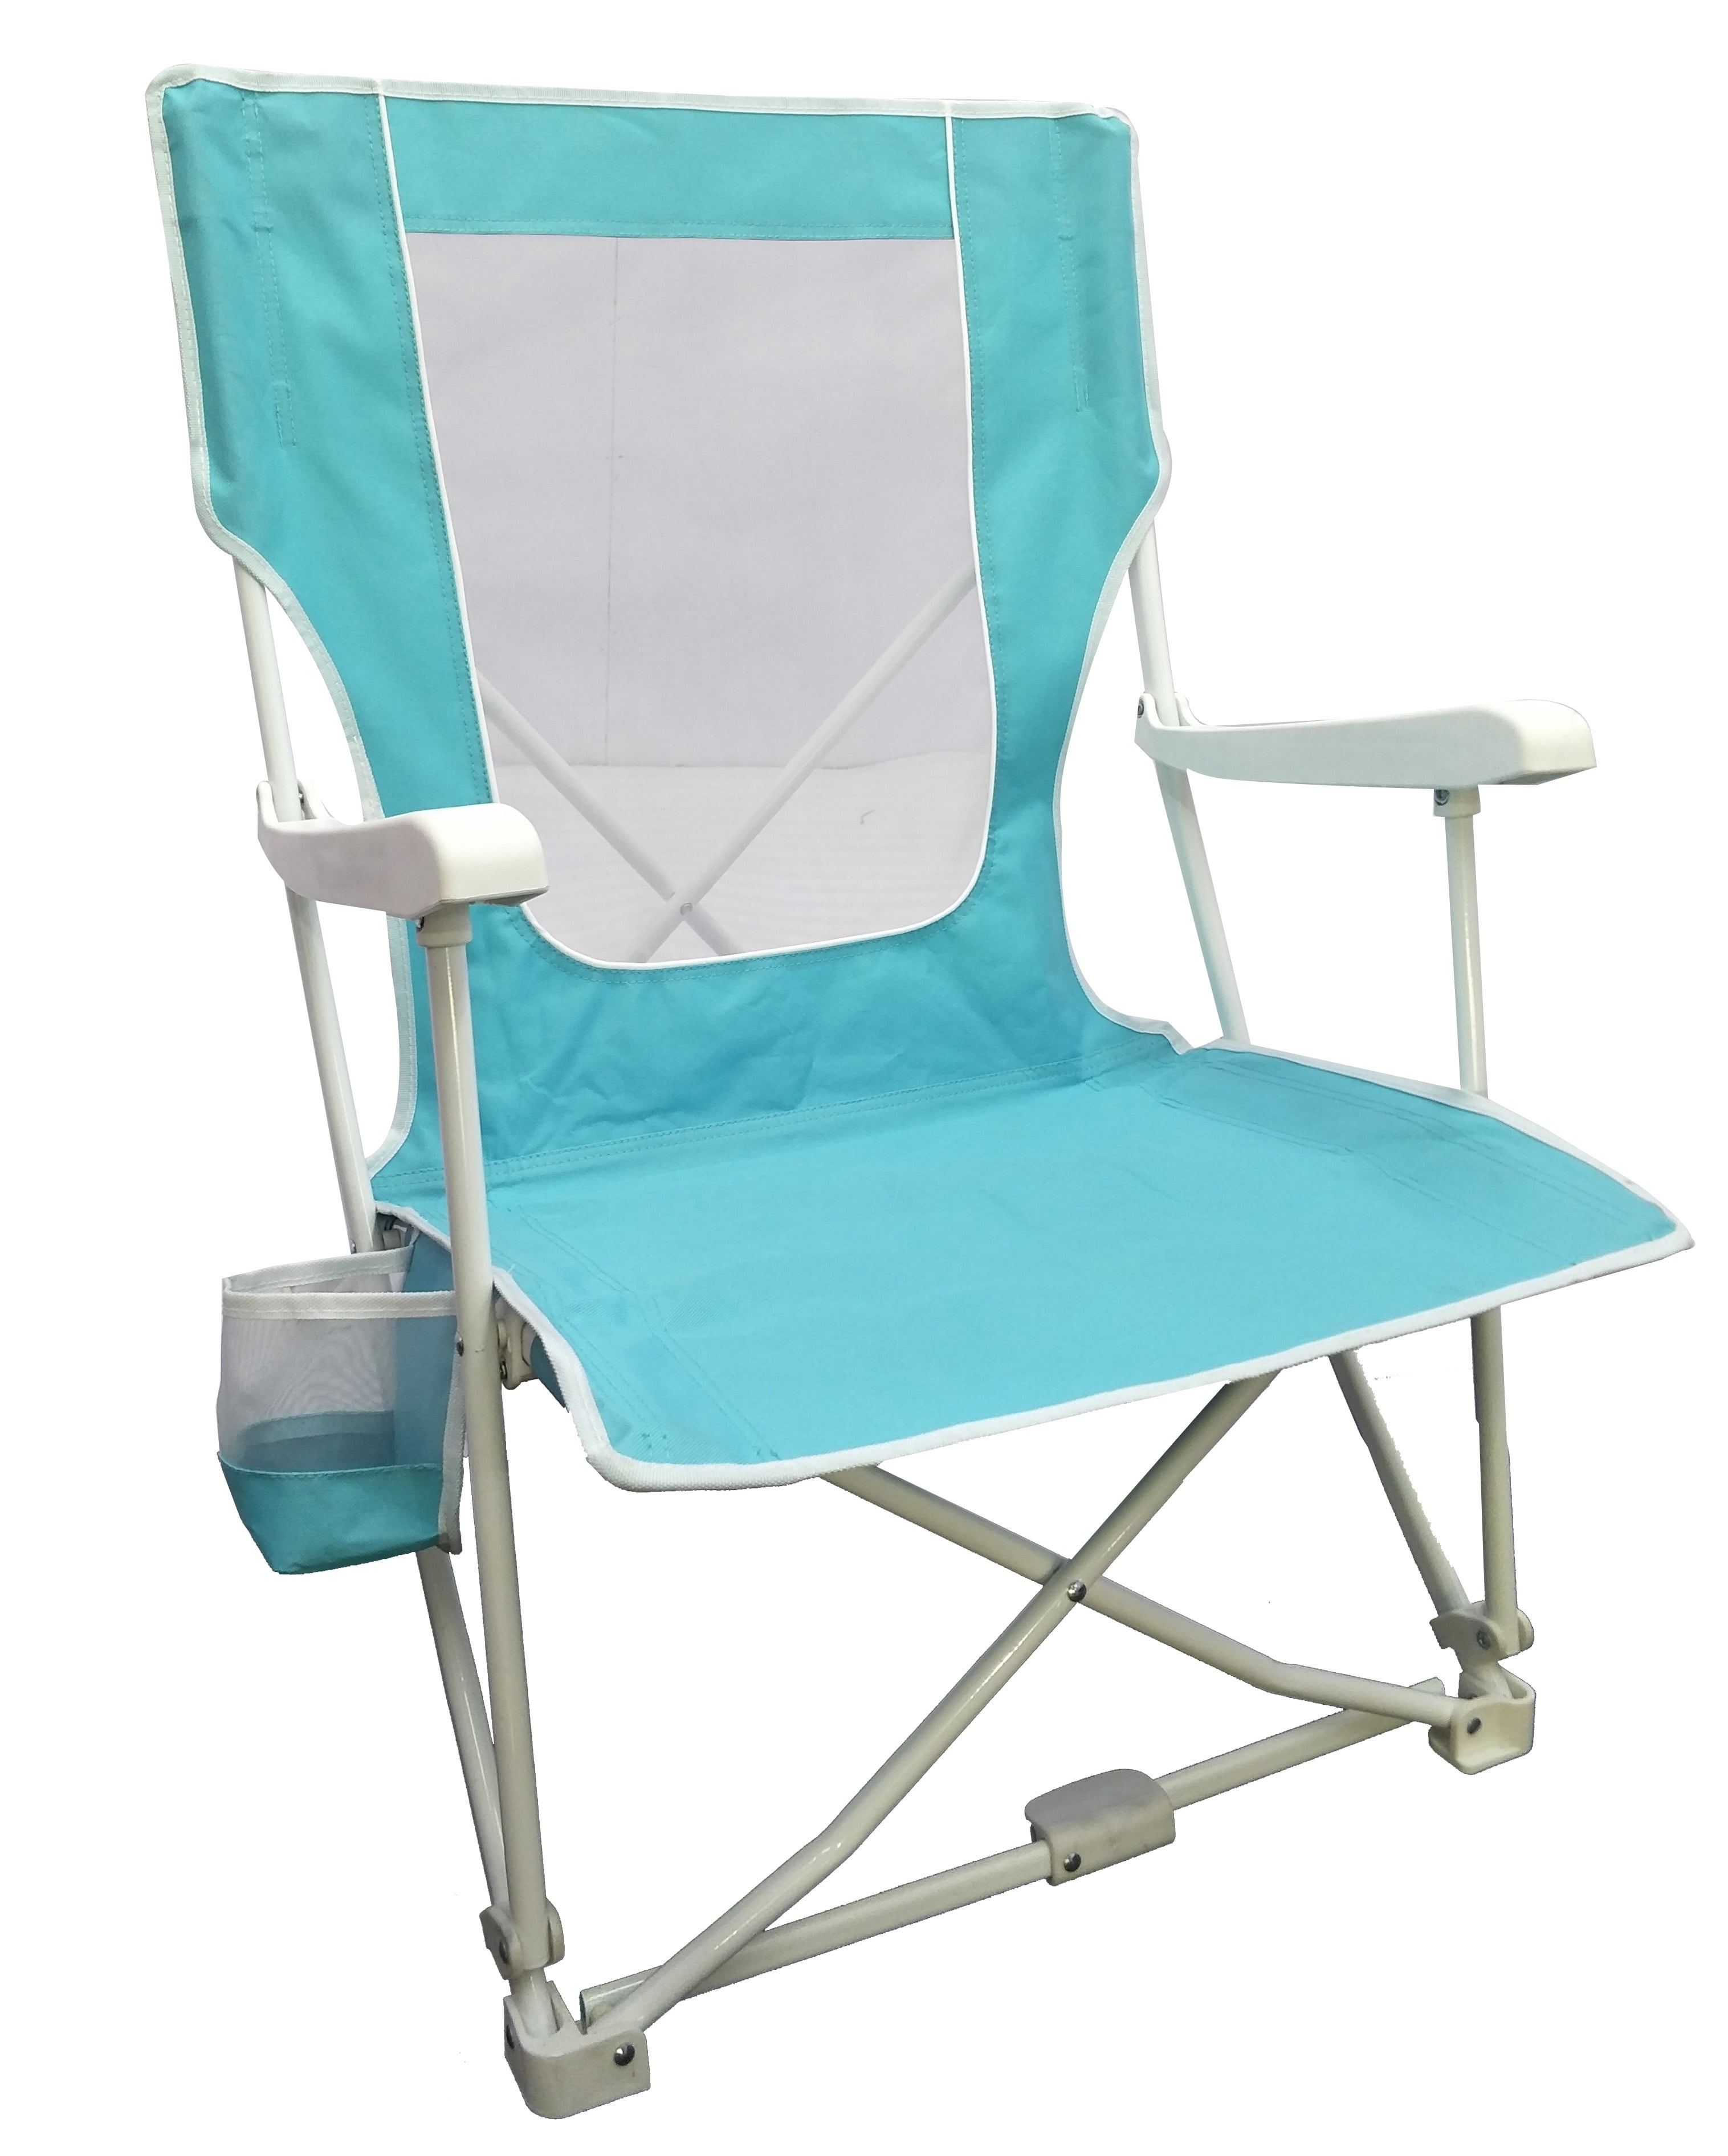 Mainstays Hard Arm Bag Chair, Teal - Walmart.com - Walmart.com